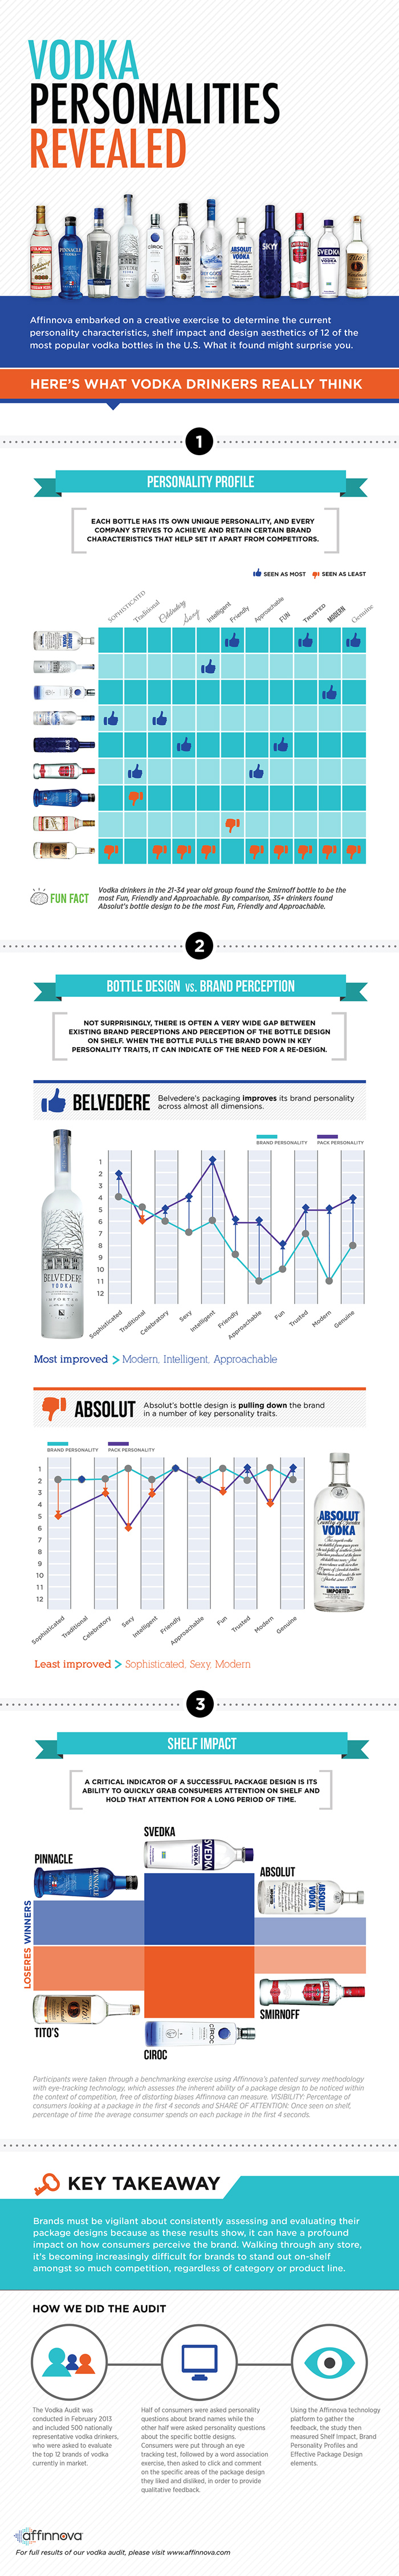 vodka infographic